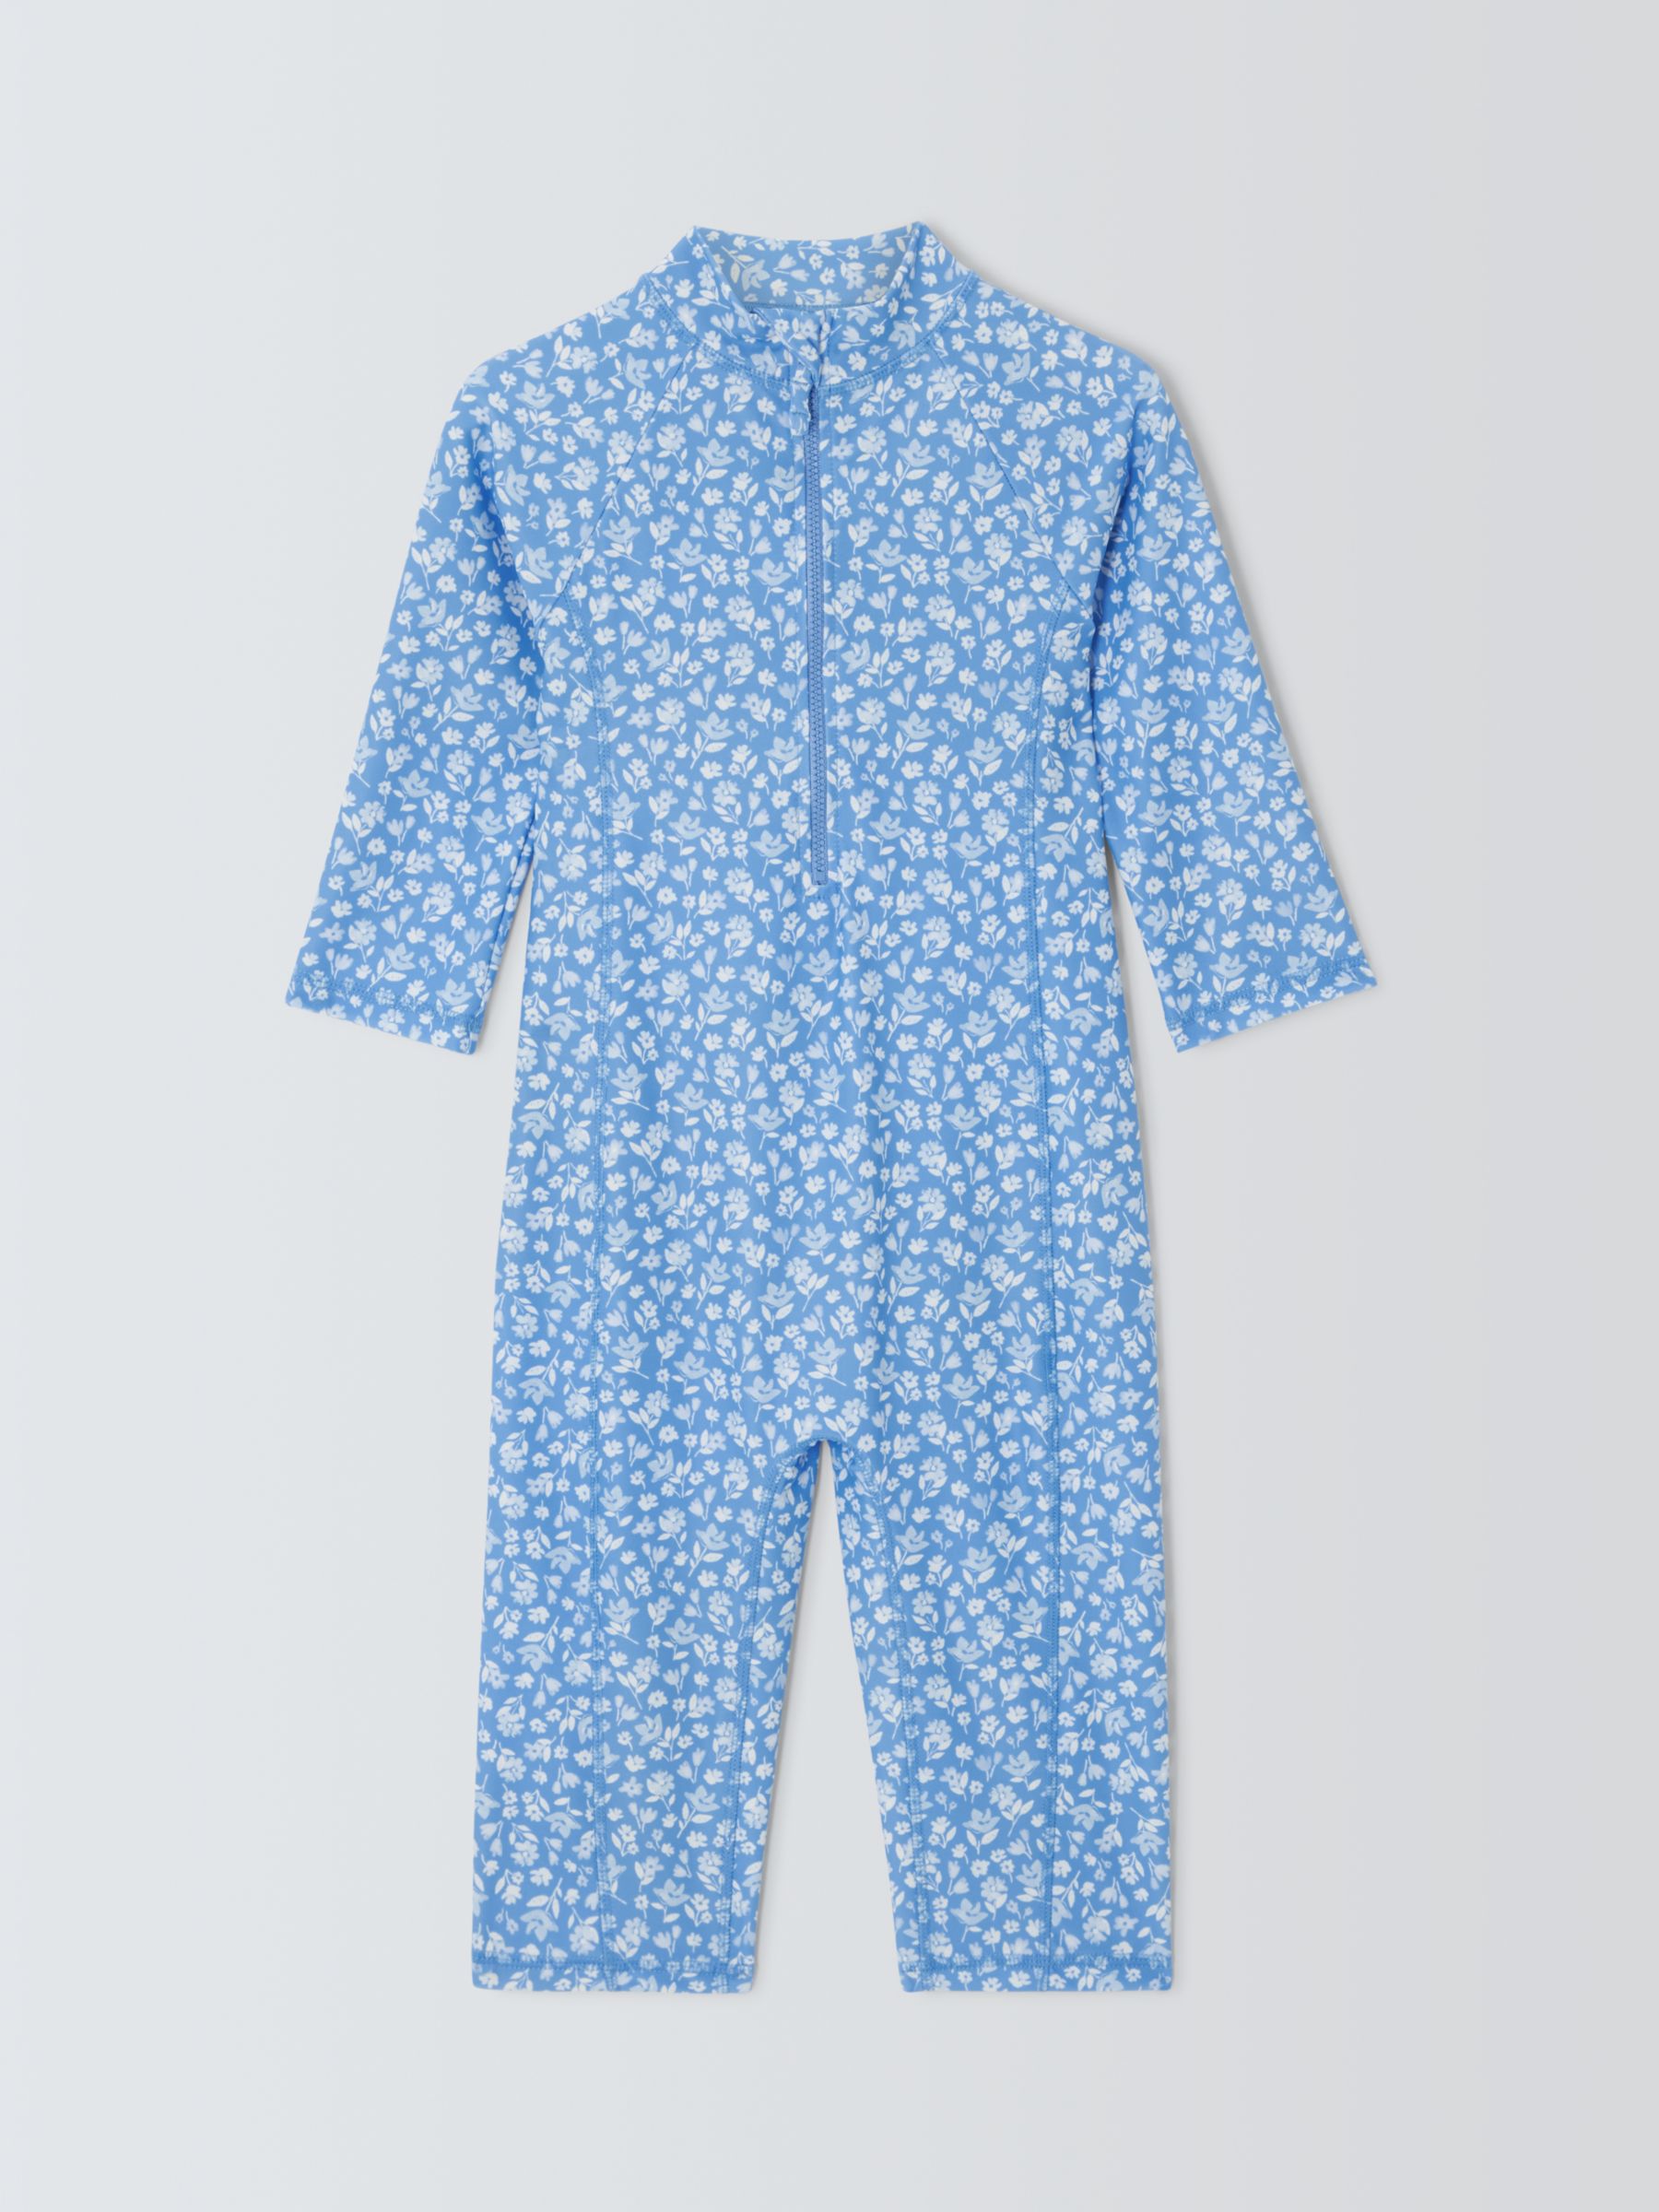 John Lewis Kids' Floral Print Sunpro Swimsuit, Blue, 4 years